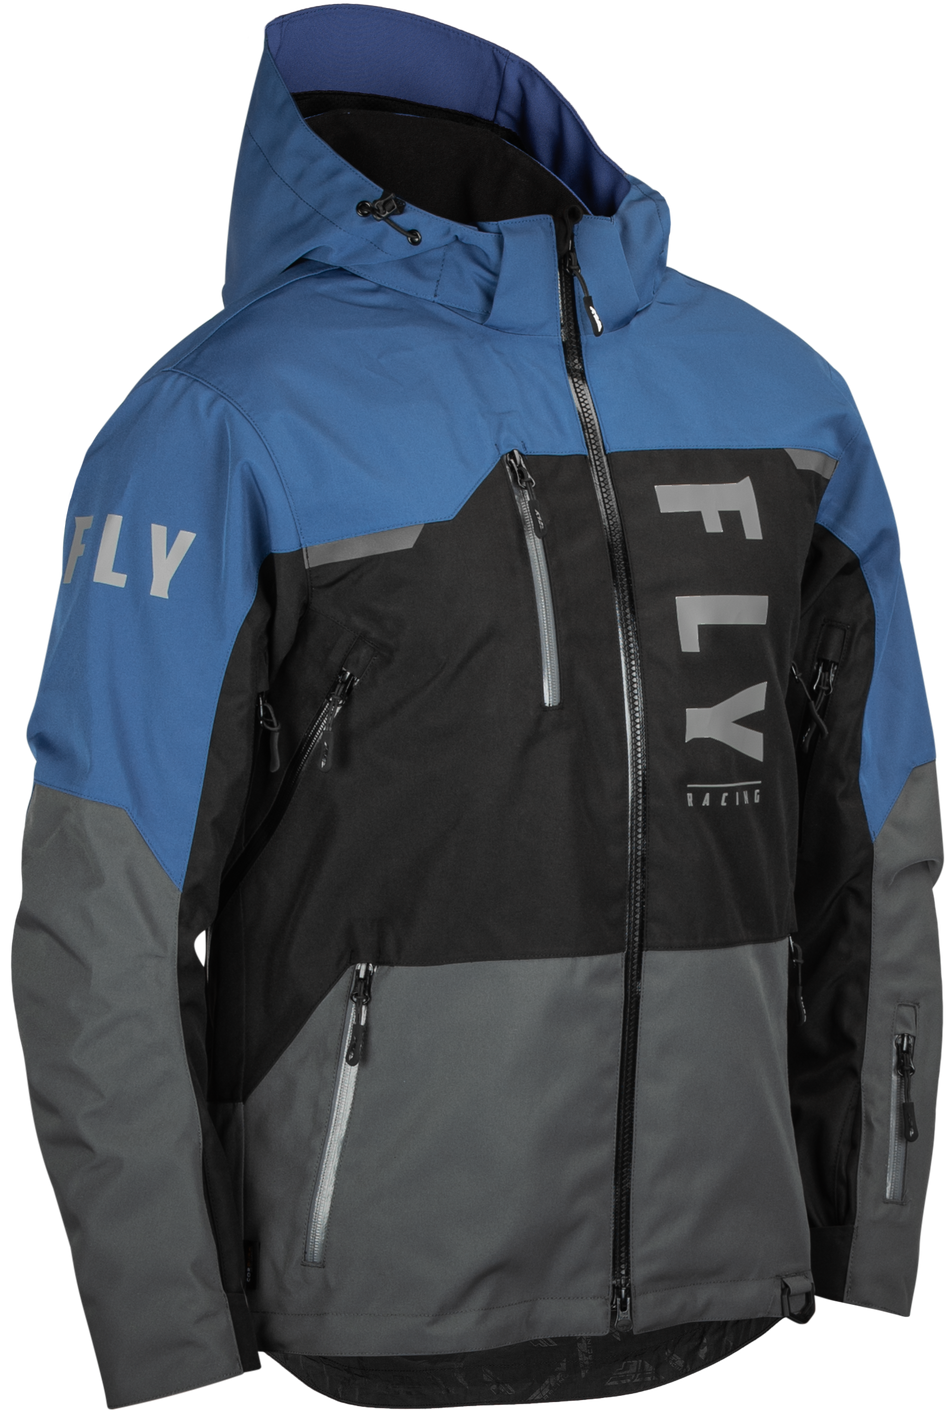 FLY RACING Carbon Jacket Black/Grey/Blue Xl 470-5202X